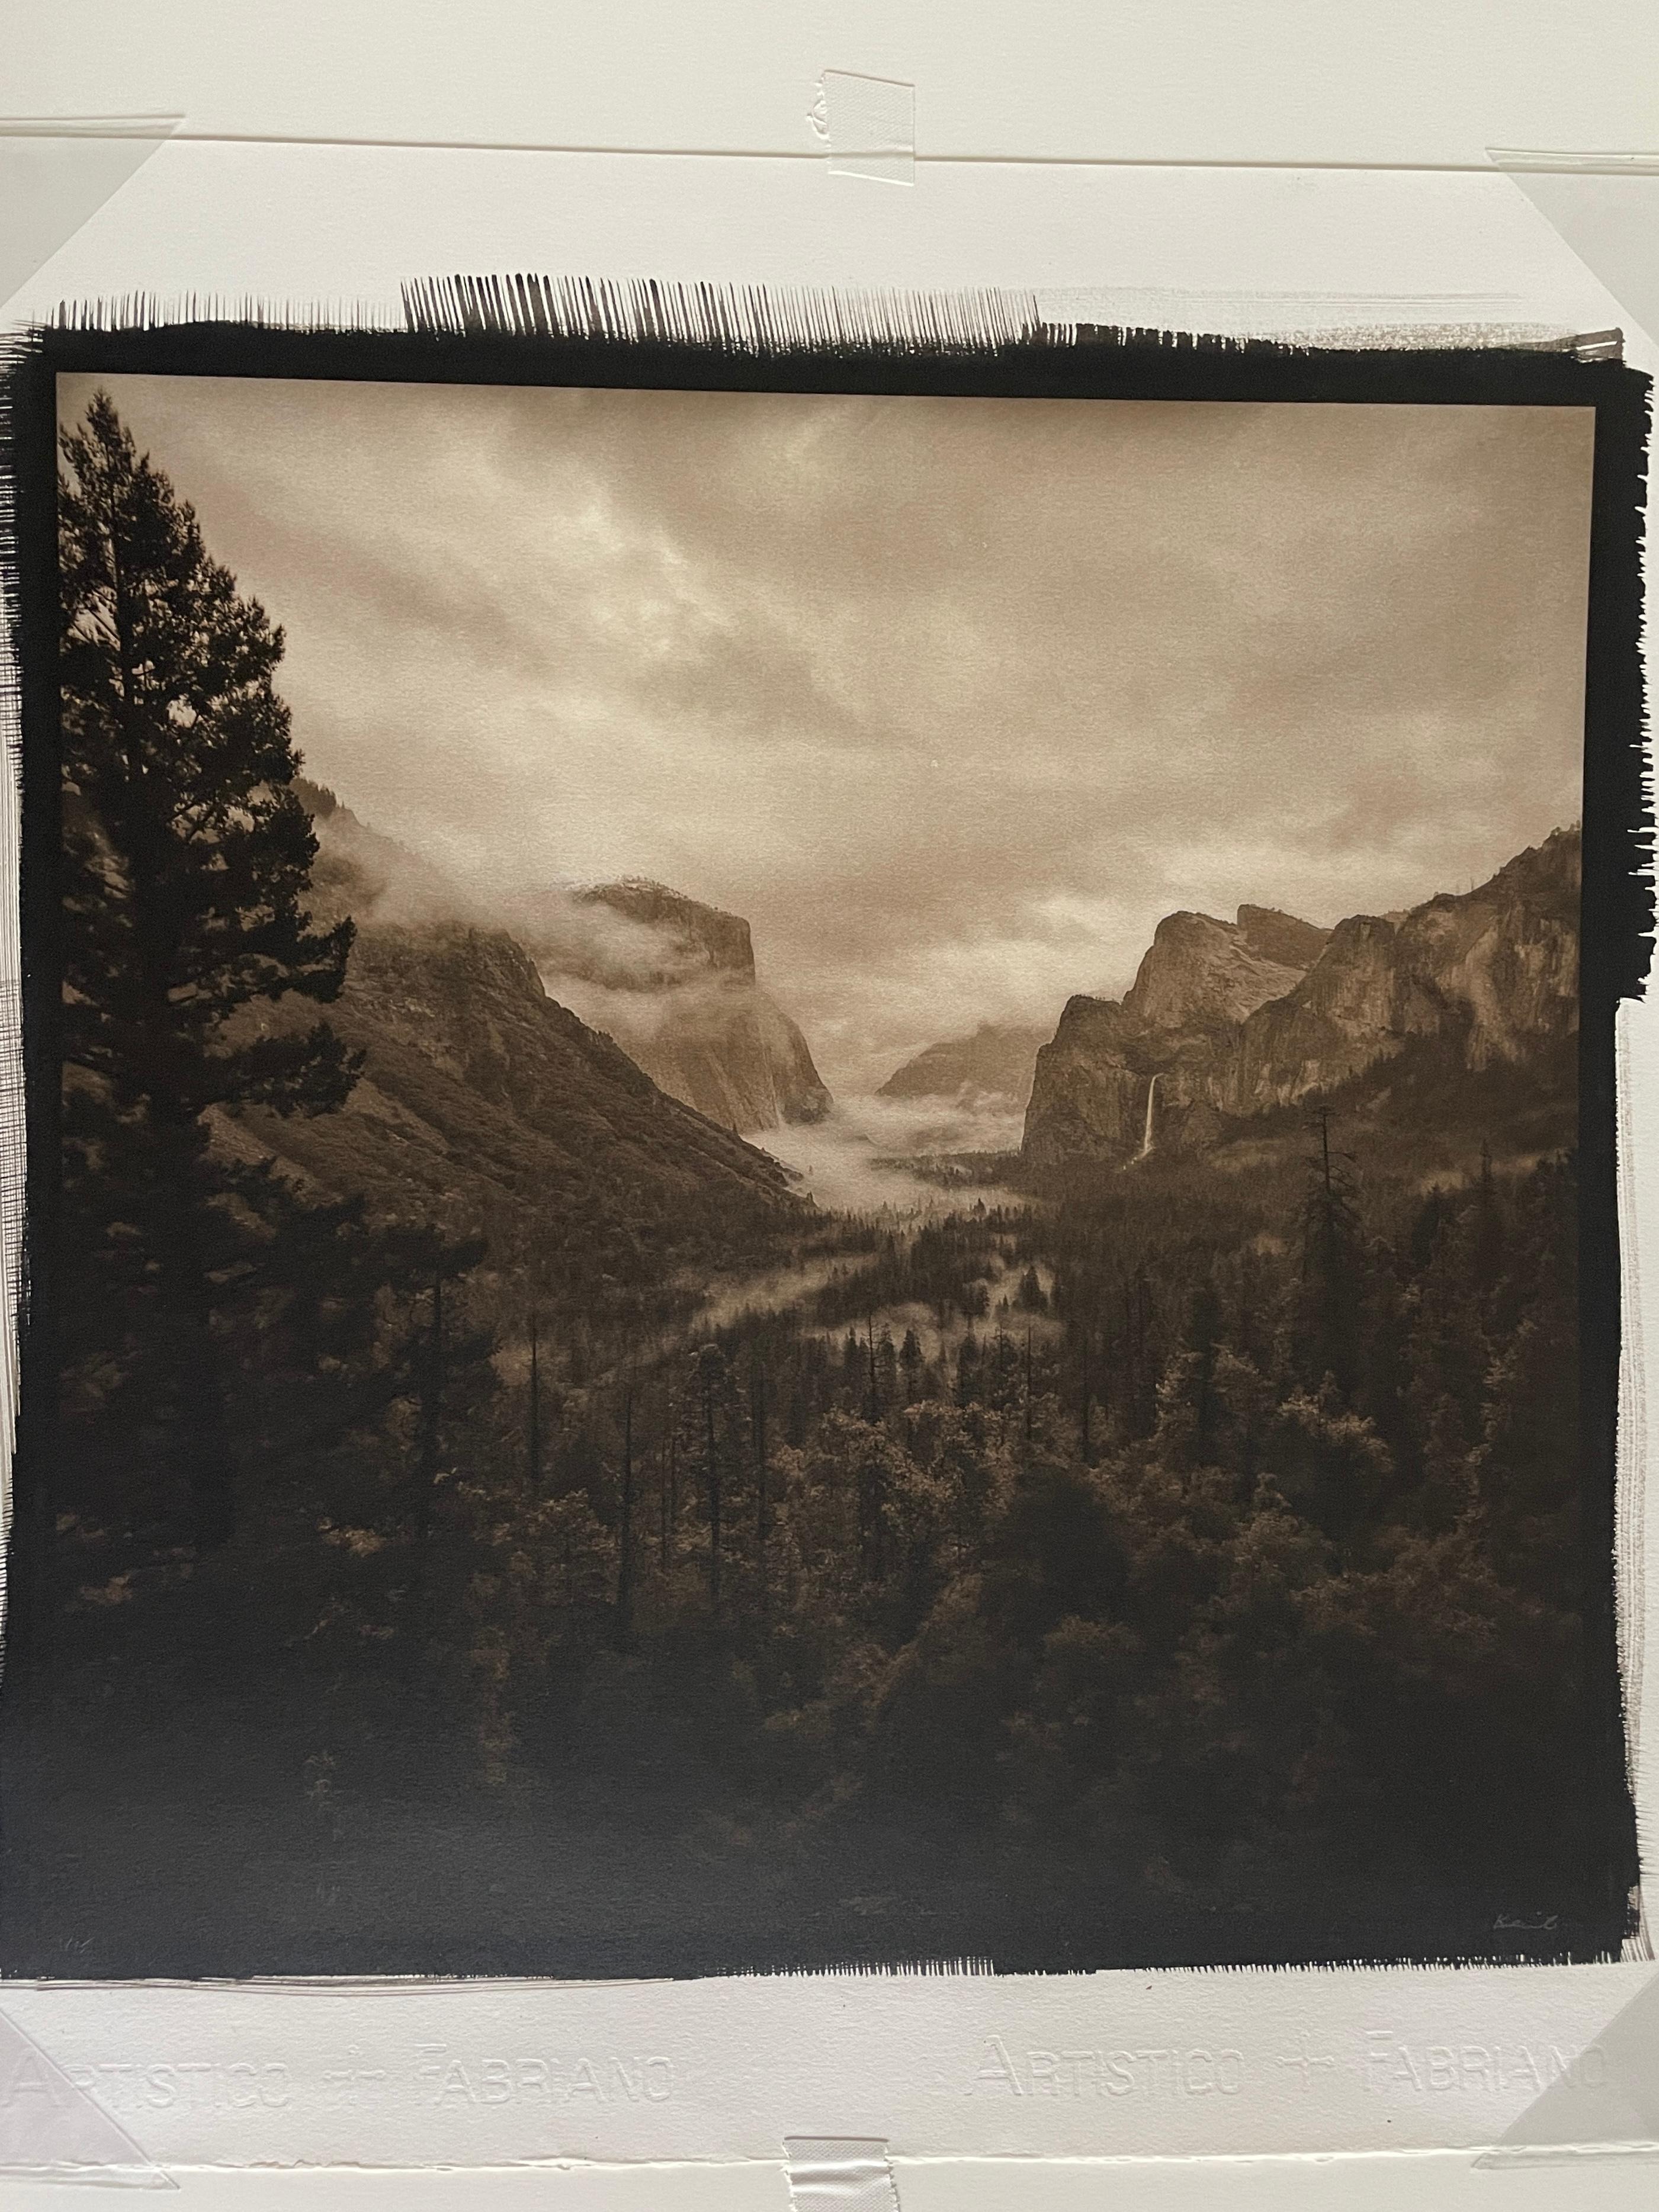 Tunnel View 2, Yosemite National Park California - Photograph by Kerik Kouklis